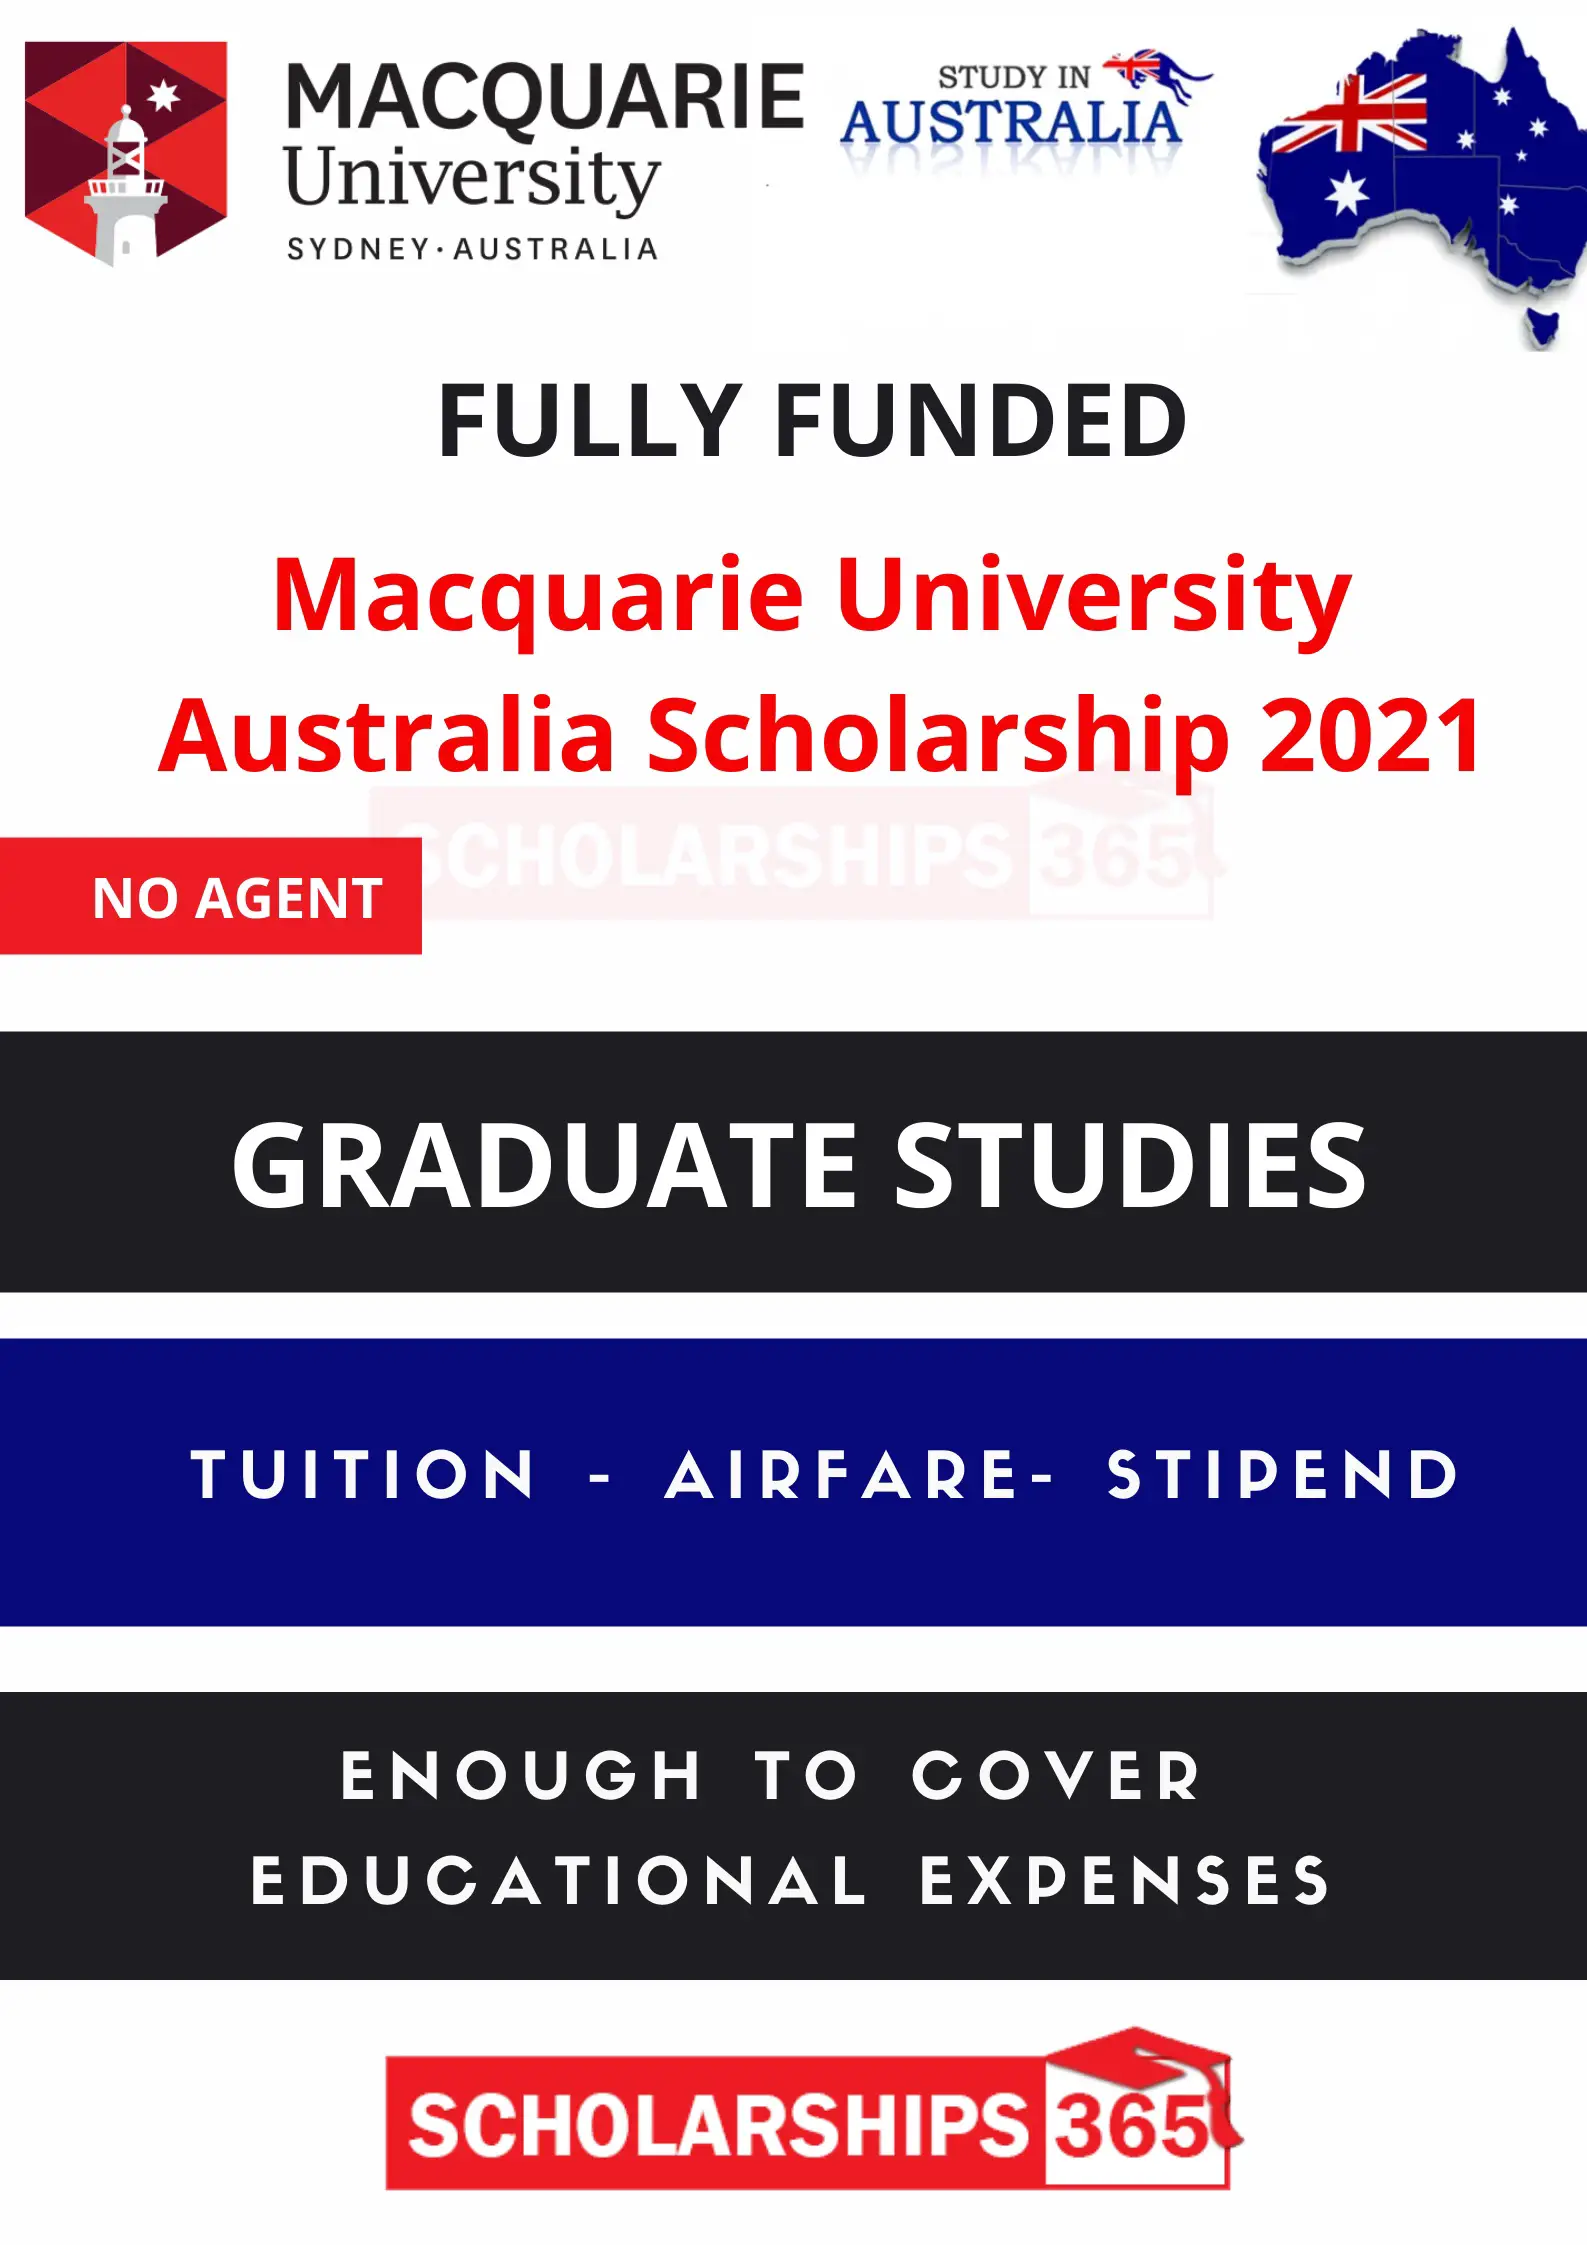 Macquarie University Australia Scholarships 2021 - Fully Funded